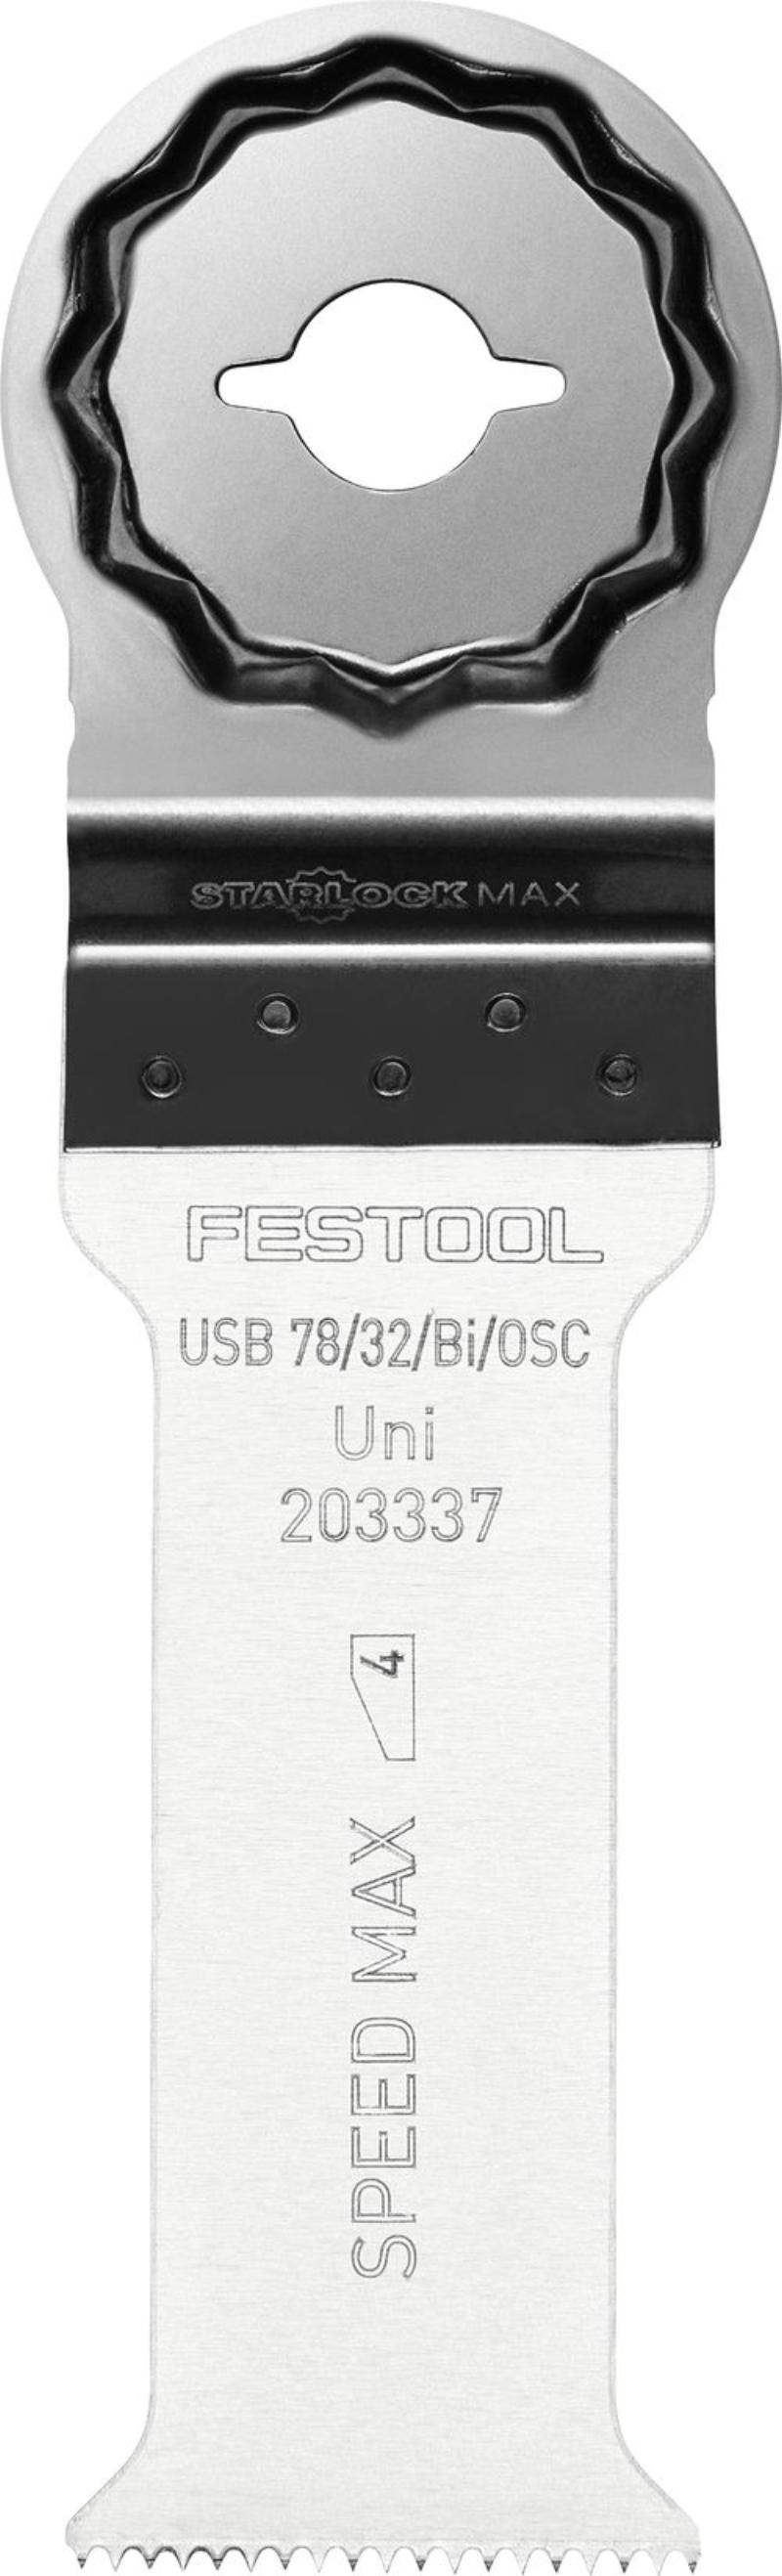 Festool Universal-Sägeblatt USB 78/32/Bi/OSC, 1 St